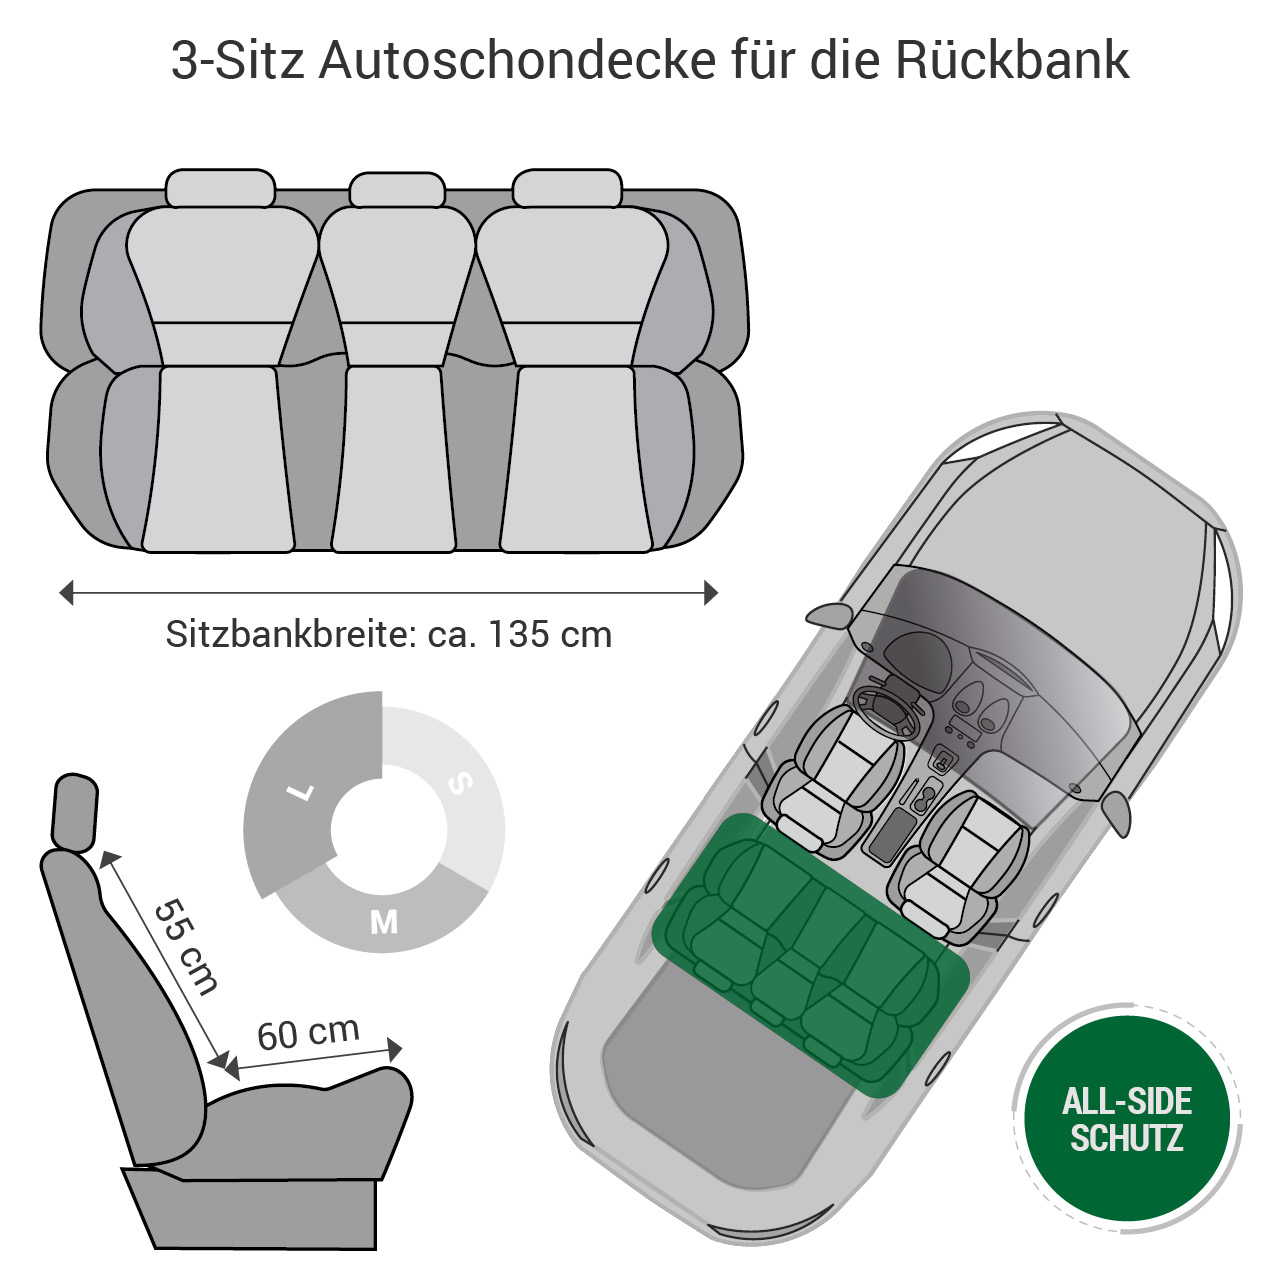 Doctor Bark - Autoschondecke für Hunde - Rückbank 3-Sitz Gr. L - braun